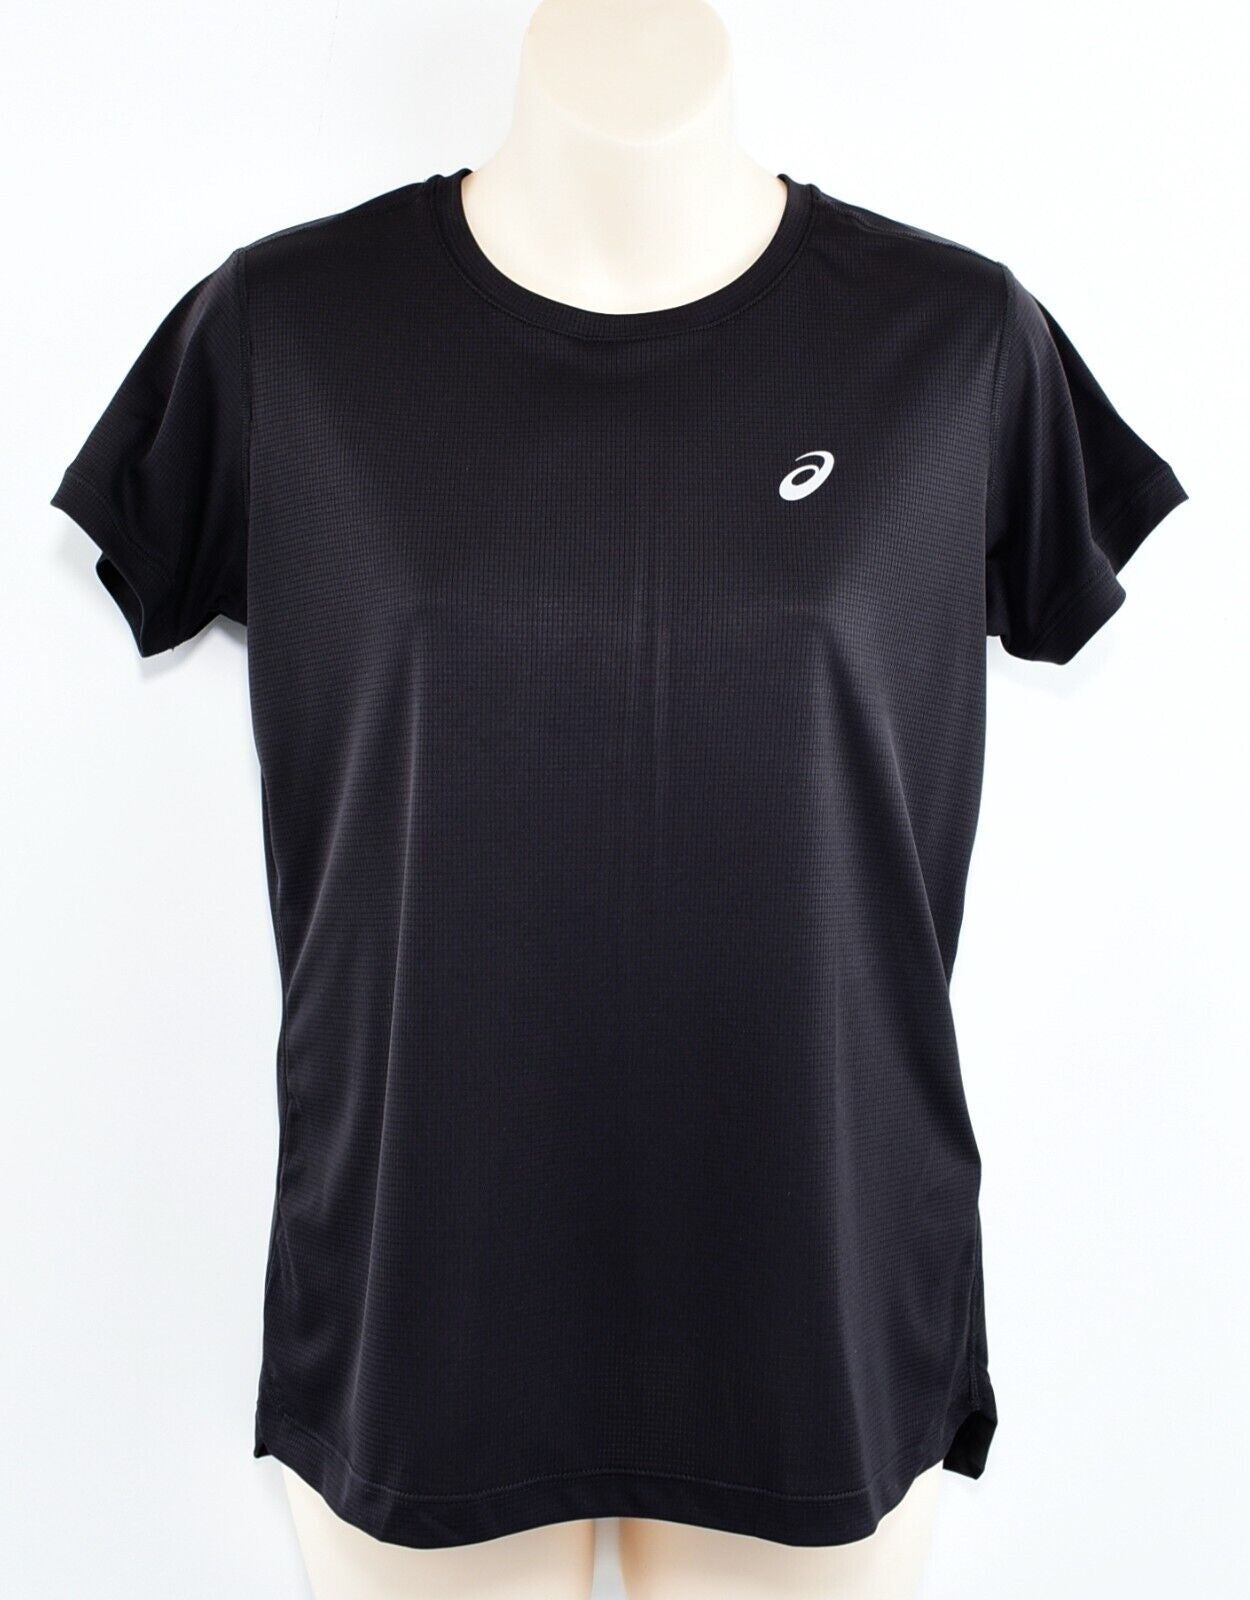 ASICS Performance Women's Core Running Top /T-shirt, Black, size XS /UK 8